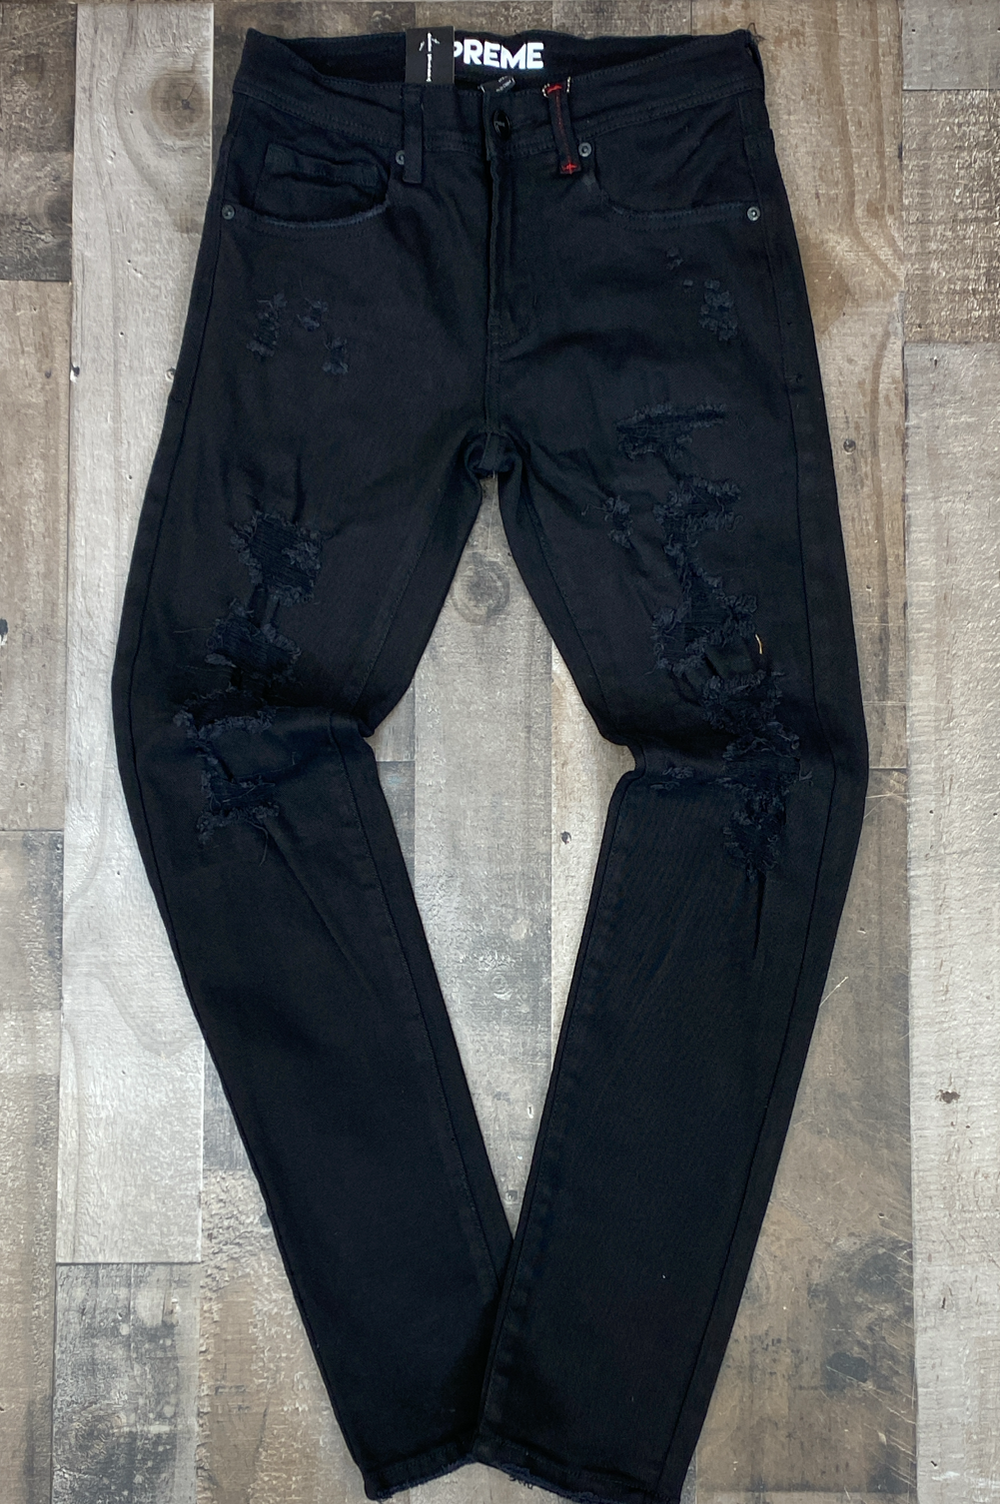 Preme- novelty black jeans